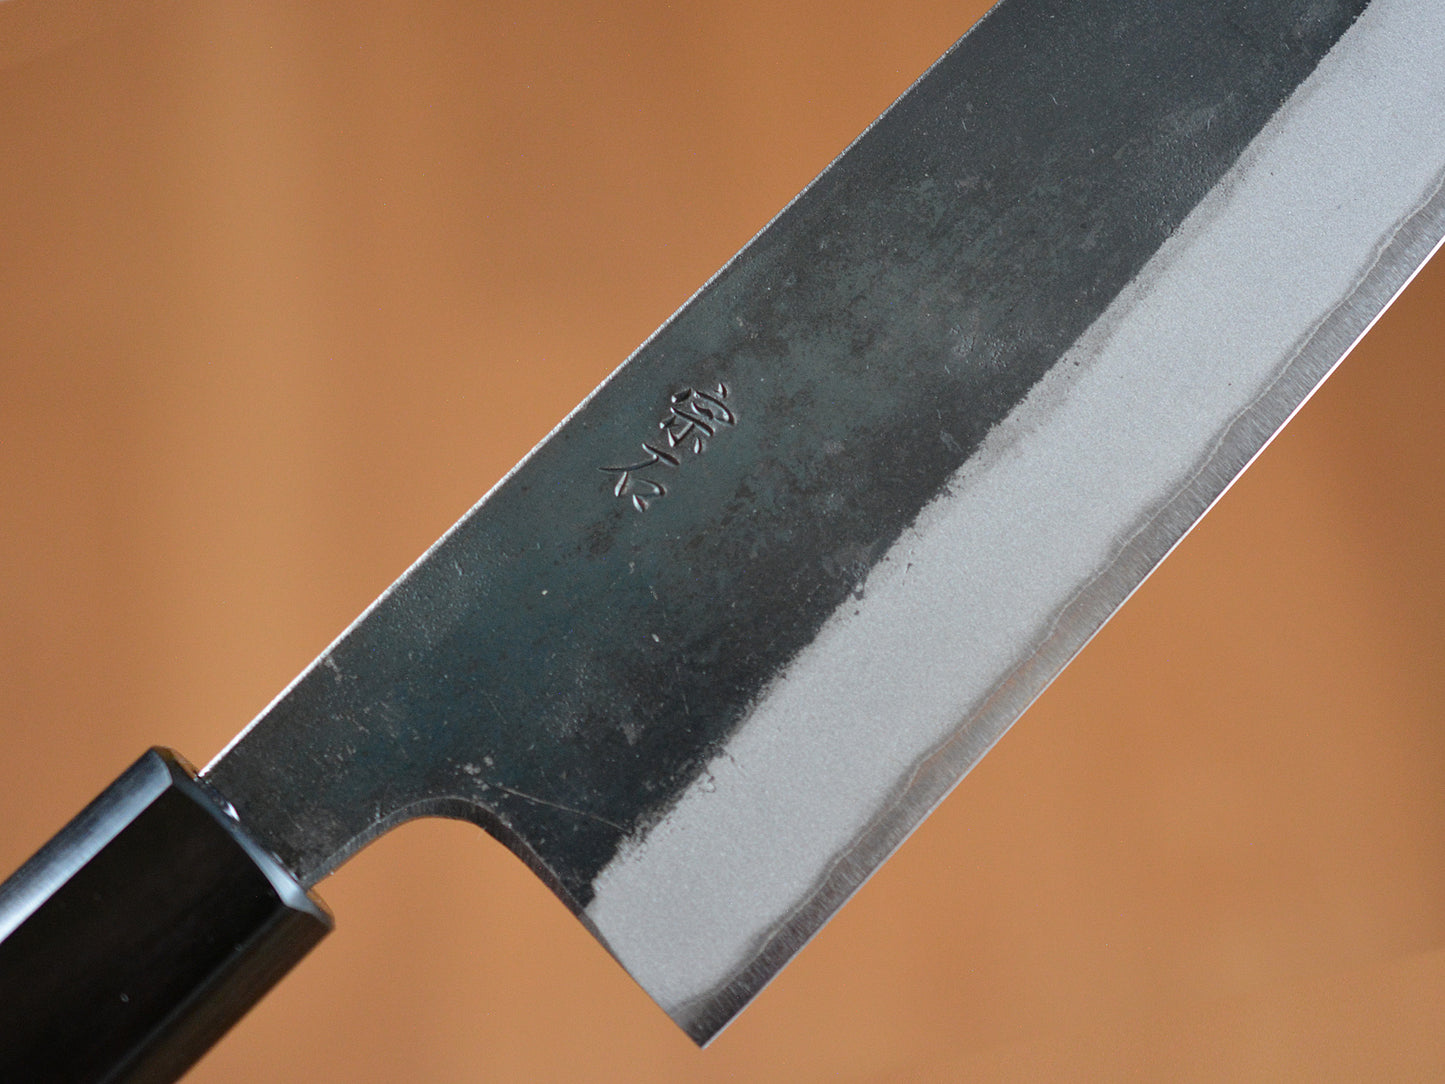 CM001 Cuchillo Japones Wa-Gyuto Negro Aogami2 Muneishi 21cm